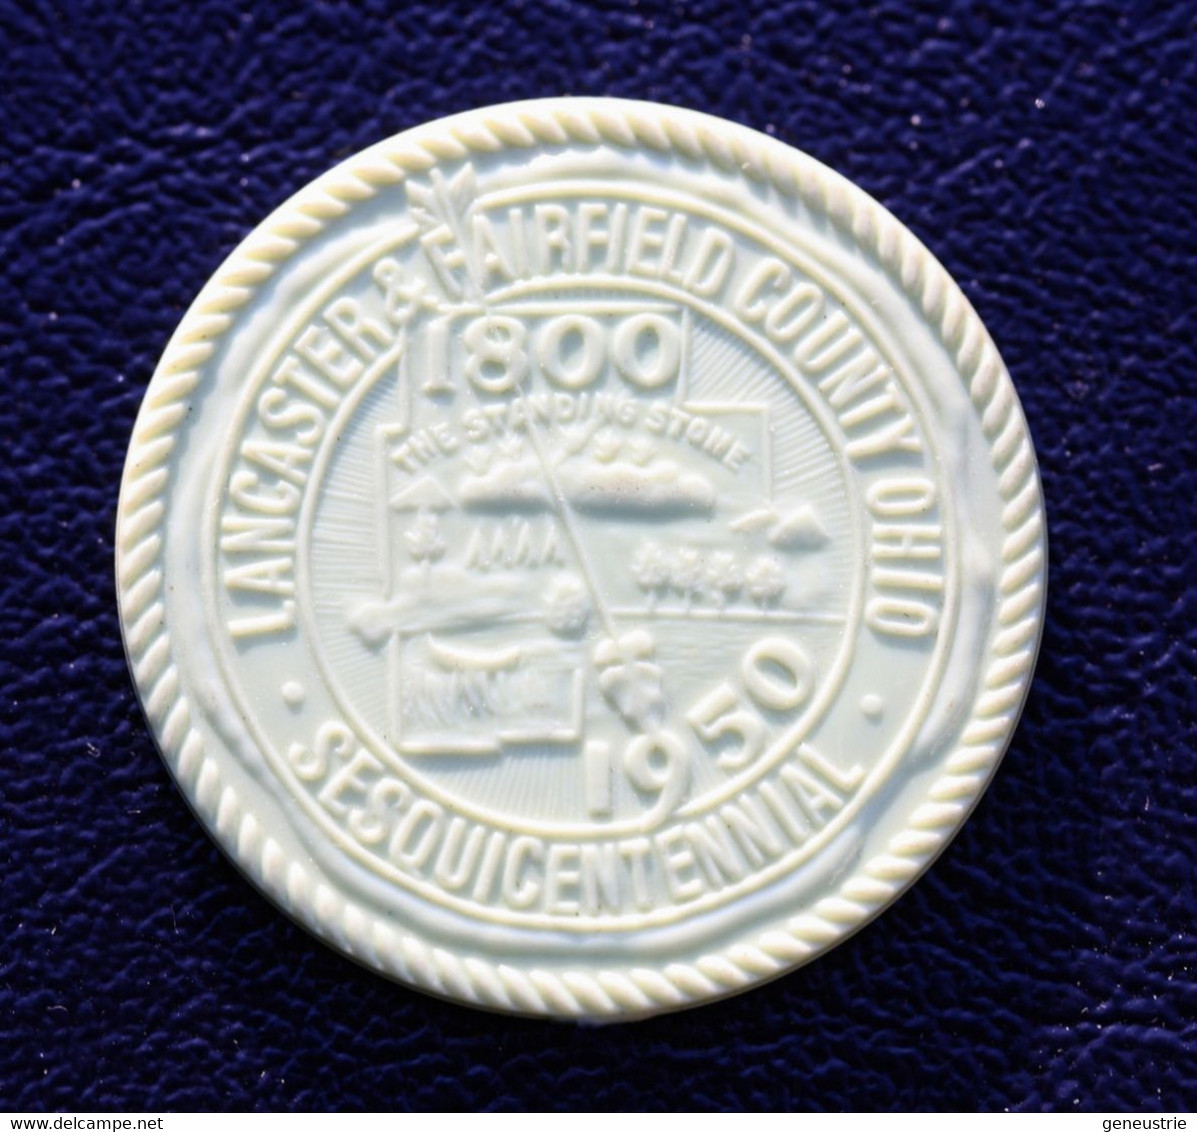 Beau Jeton De Nécessité 1800-1950 "10 Cent - Sesqui-centenal Souvenir Token - Lancaster & Fairfield County Ohio - USA - Monetari/ Di Necessità